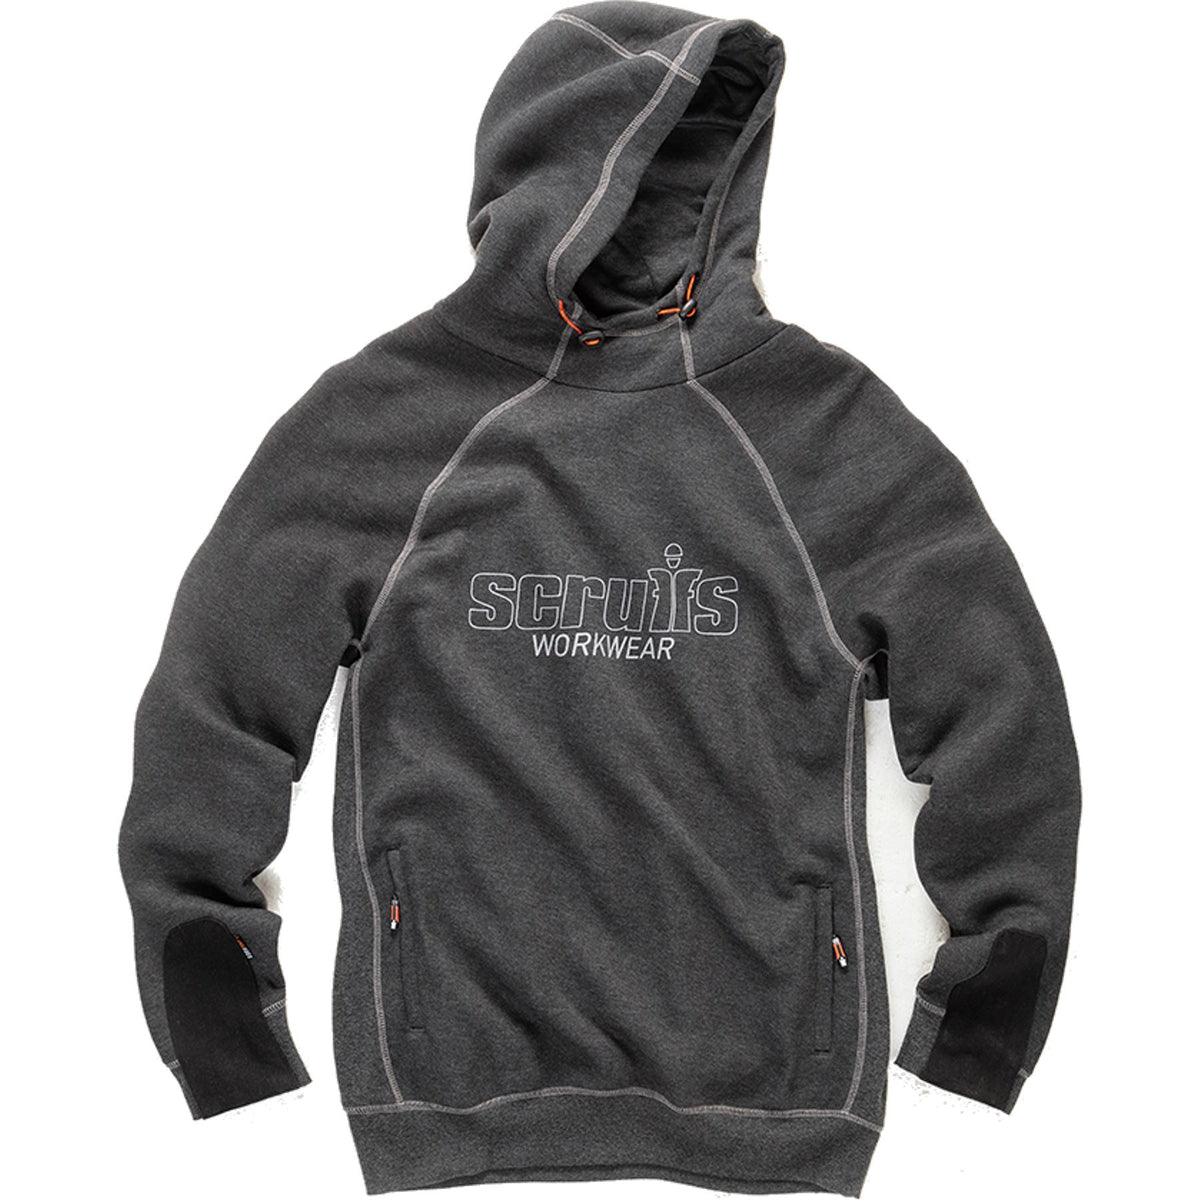 Scruffs Trade Work Hoodie Graphite Men's Sweatshirt Hooded Jumper Workwear Top